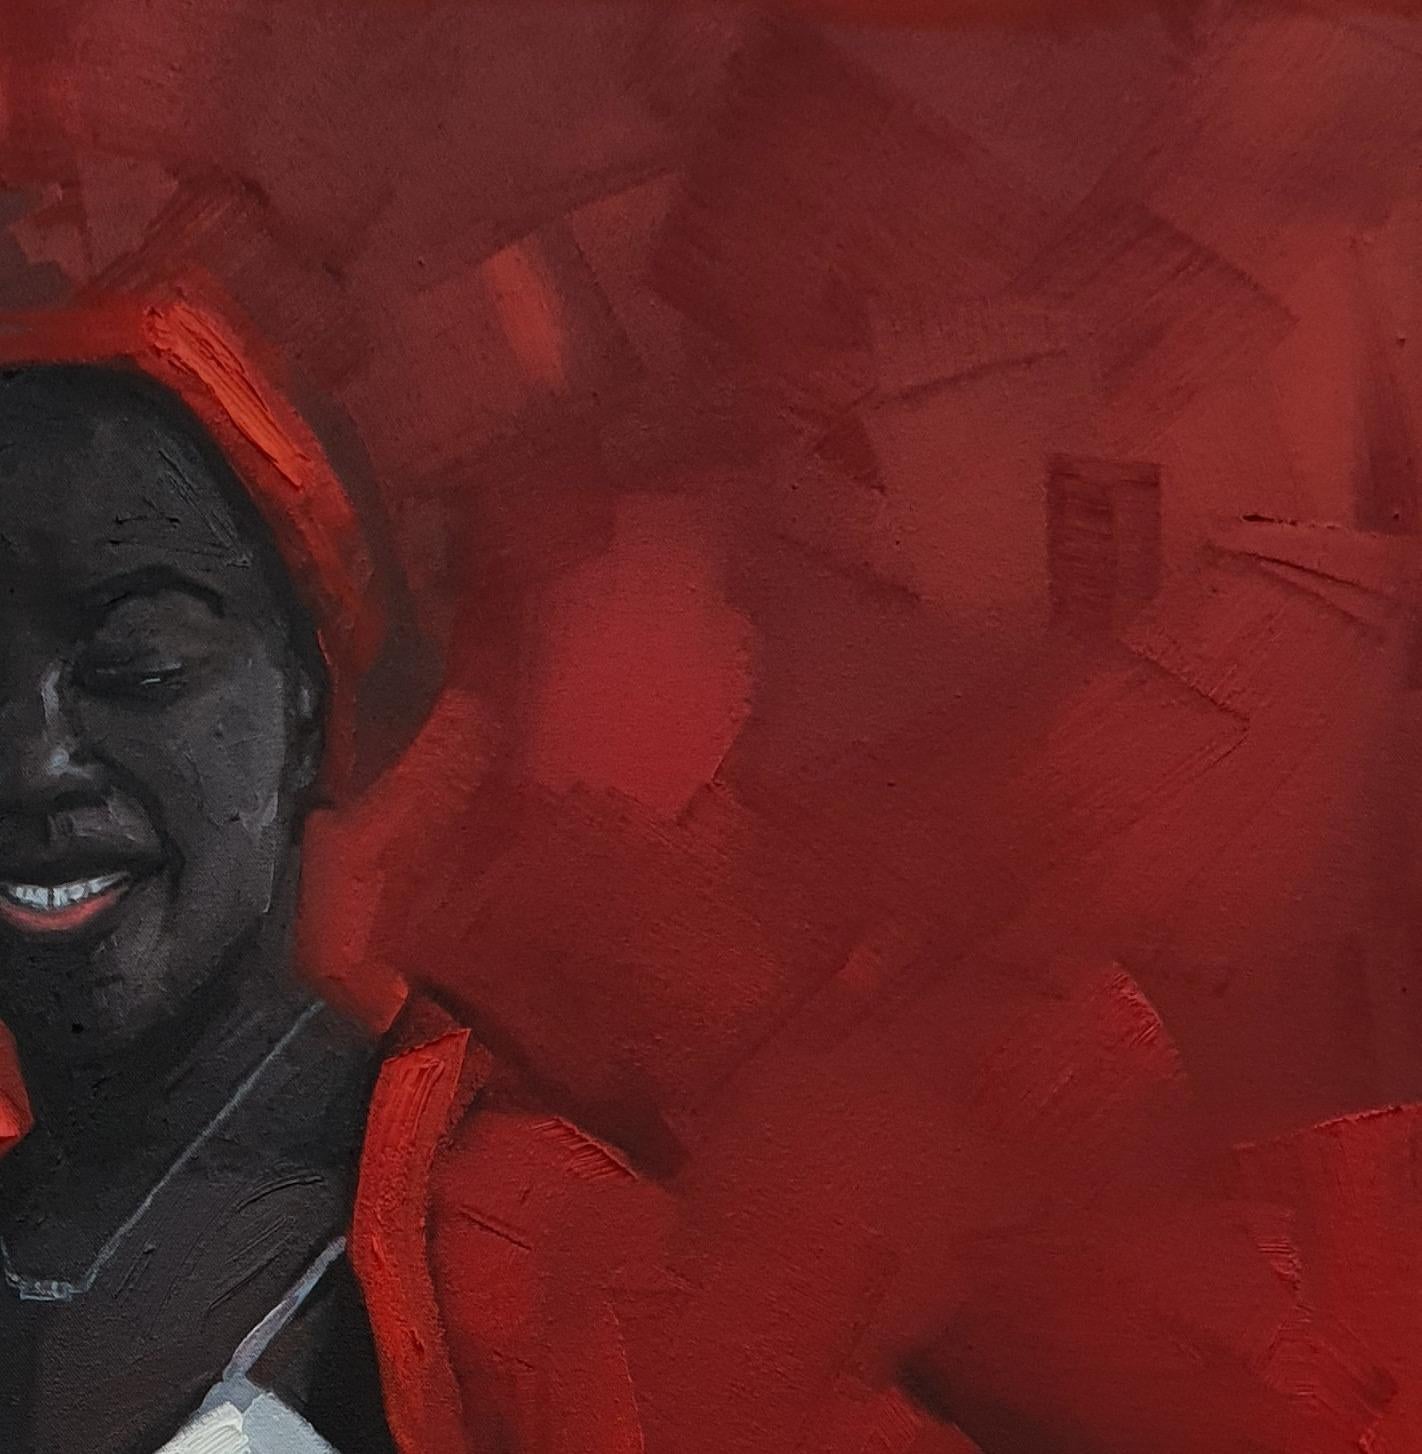 Farida - Contemporary Painting by Ajegbomogun Damilola